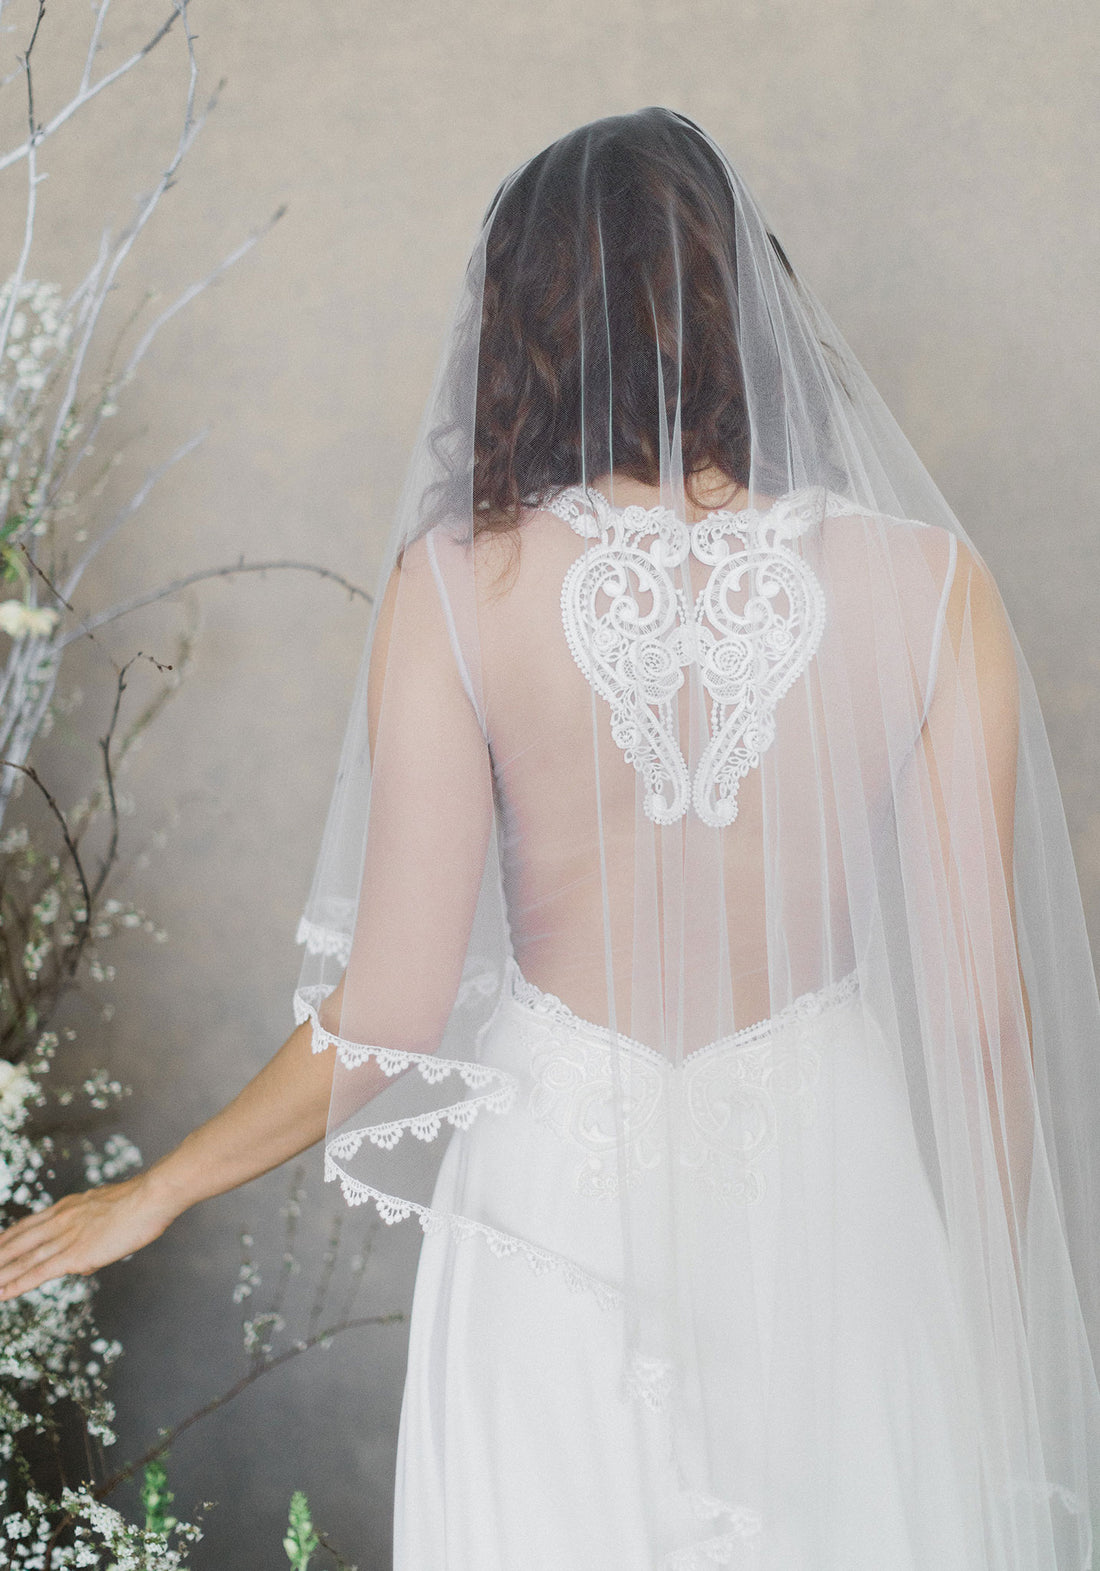 Atelier Wu Bridal Tristan, AW2349 Sample Wedding Dress Save 70% - Stillwhite